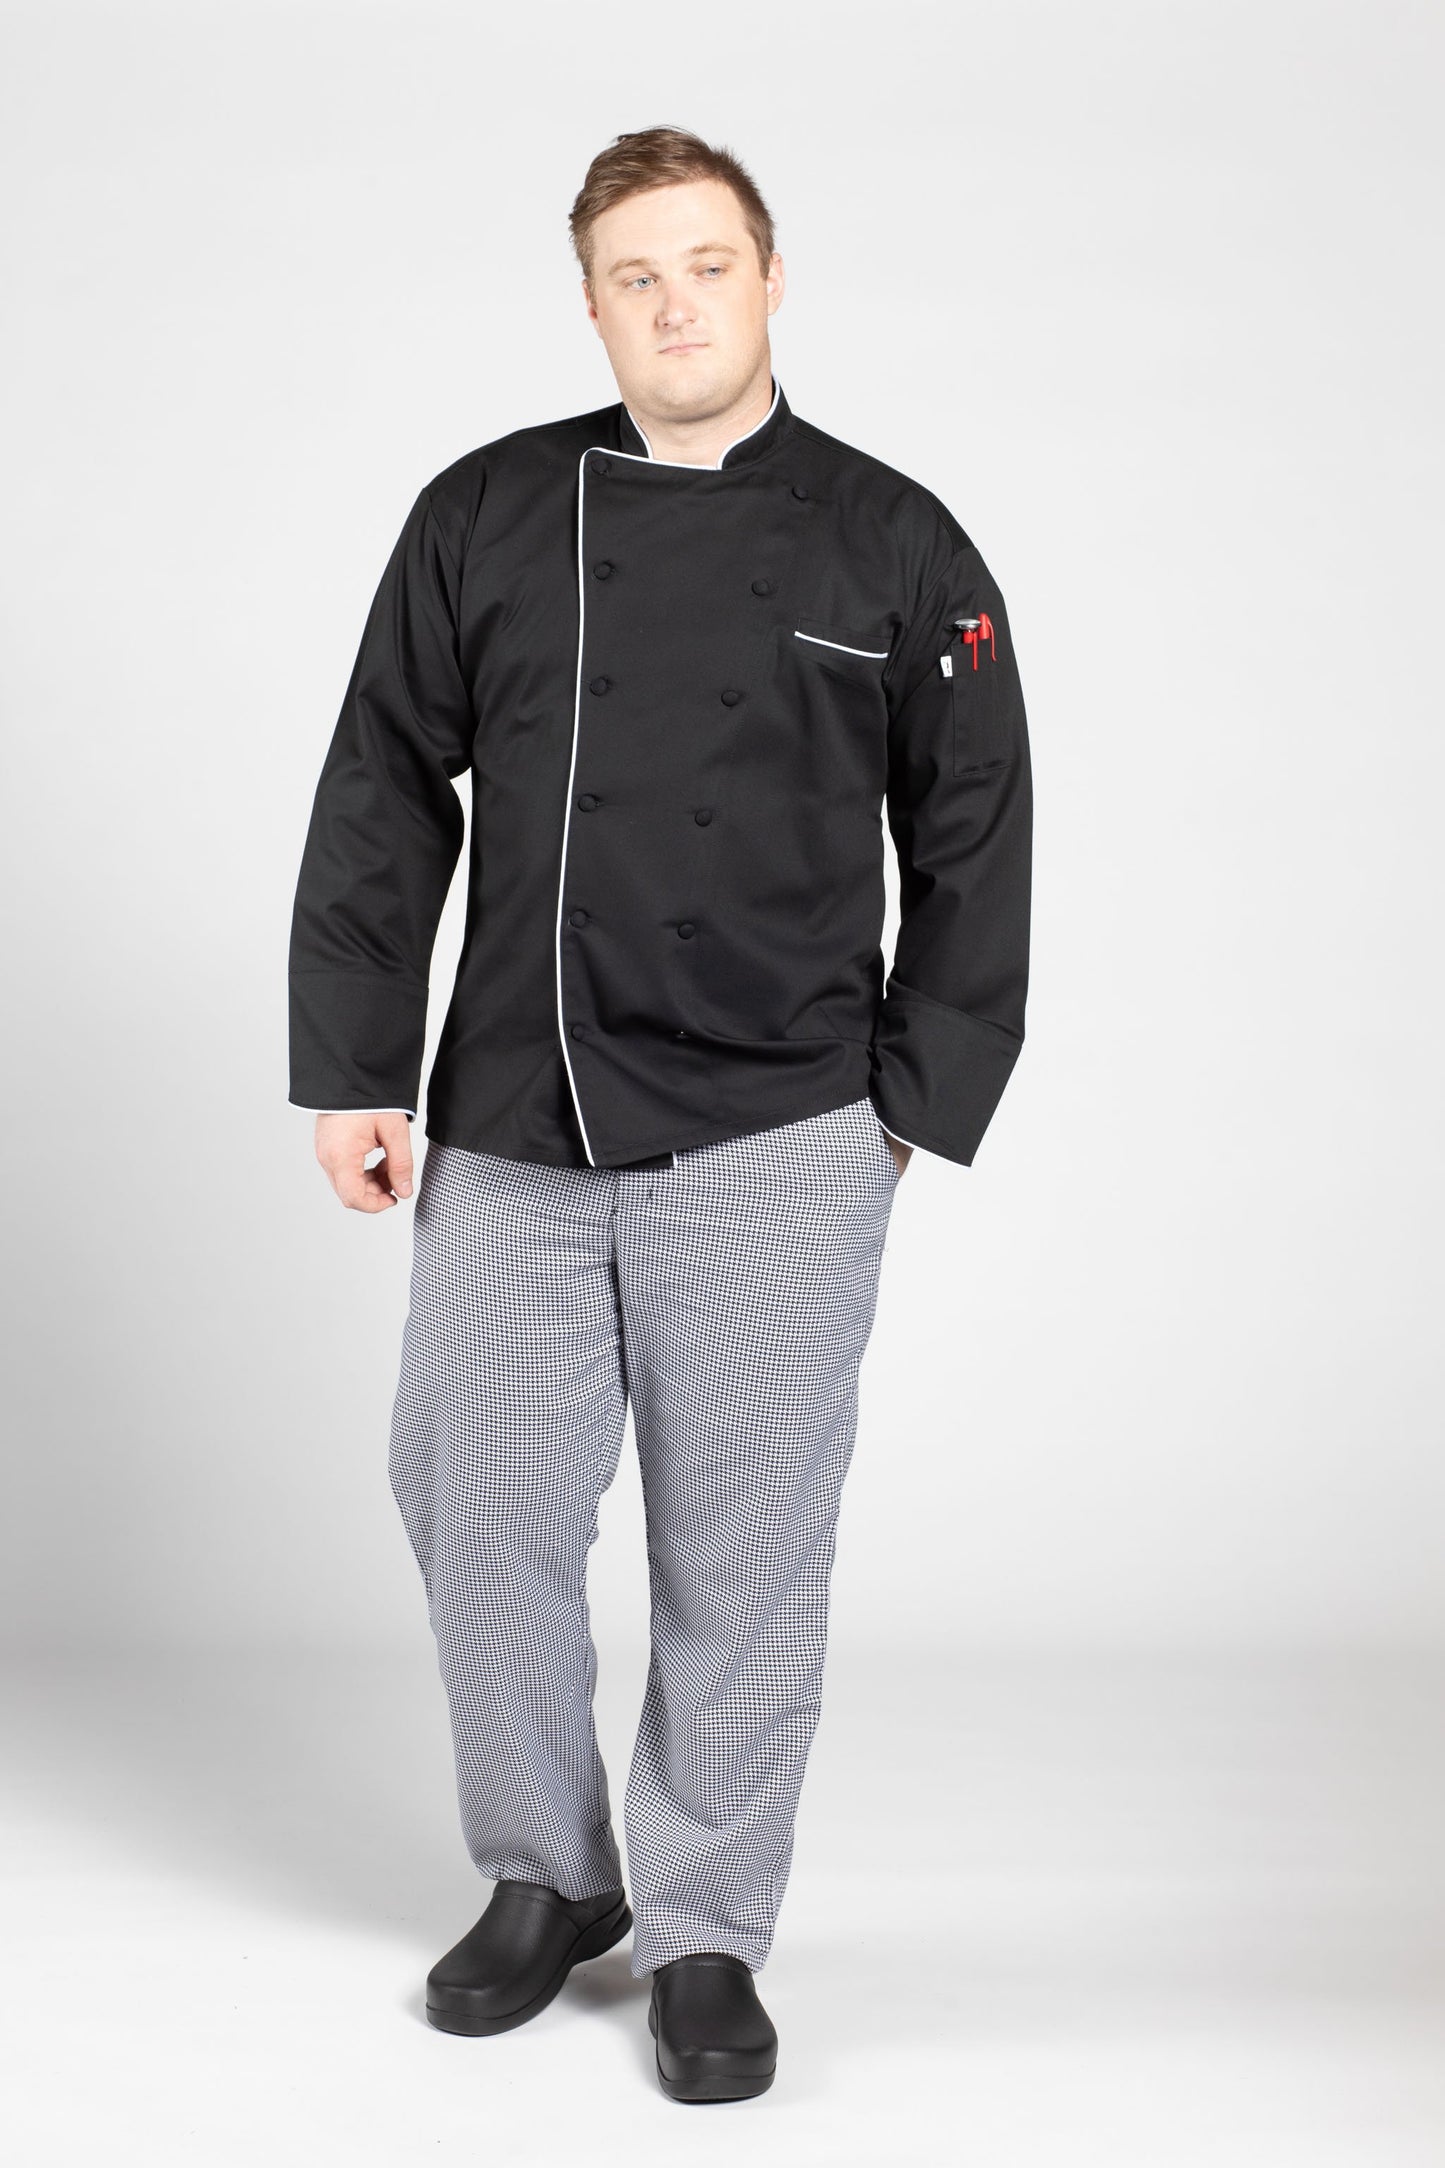 Murano Executive Chef Coat #0432